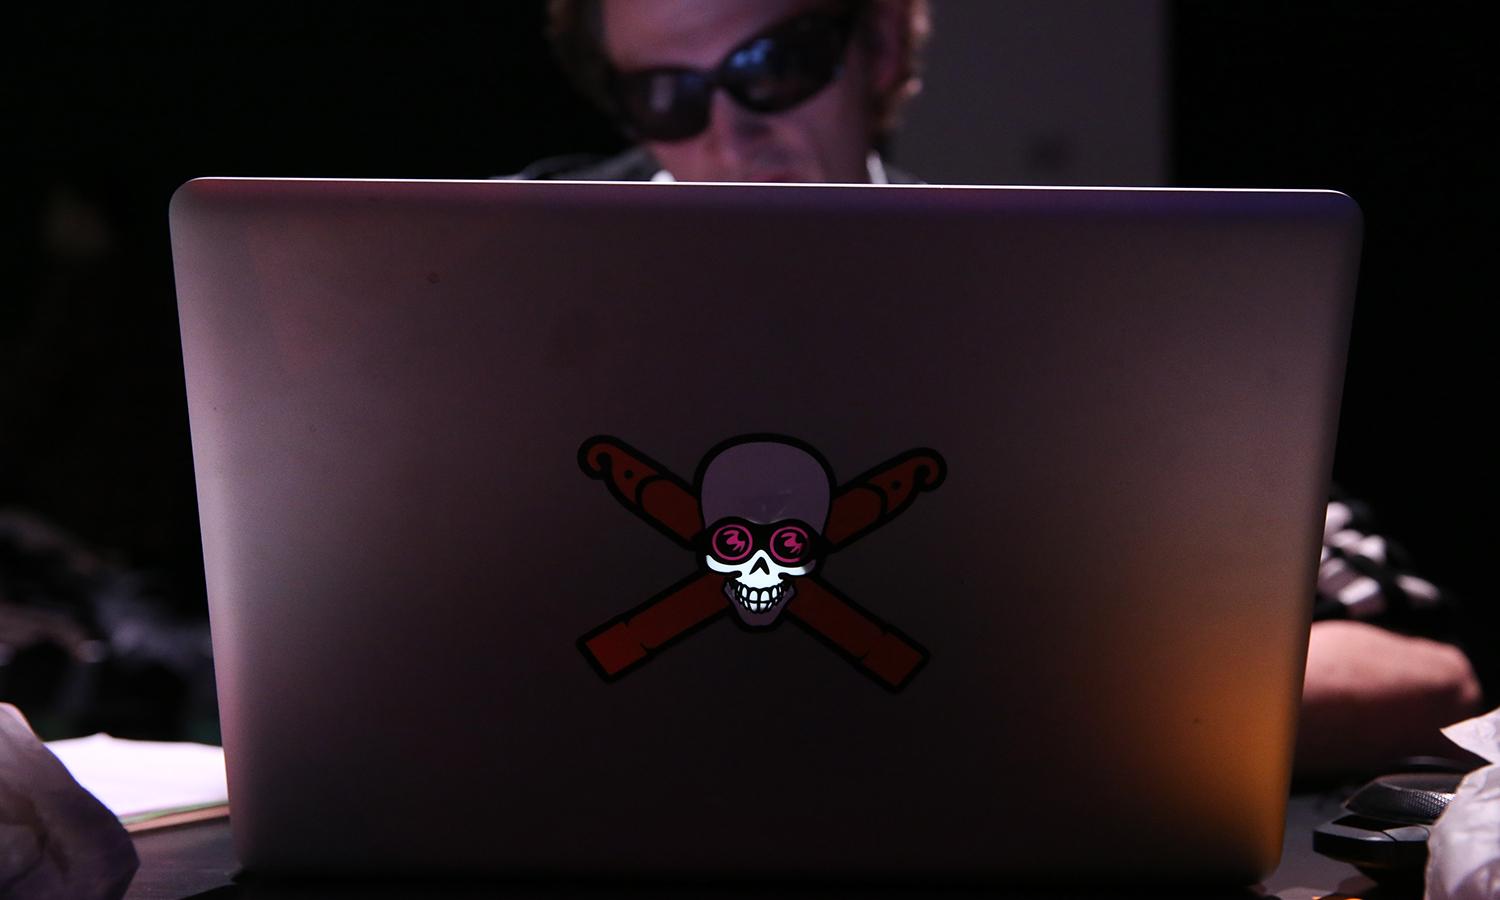 A hacker uses a laptop